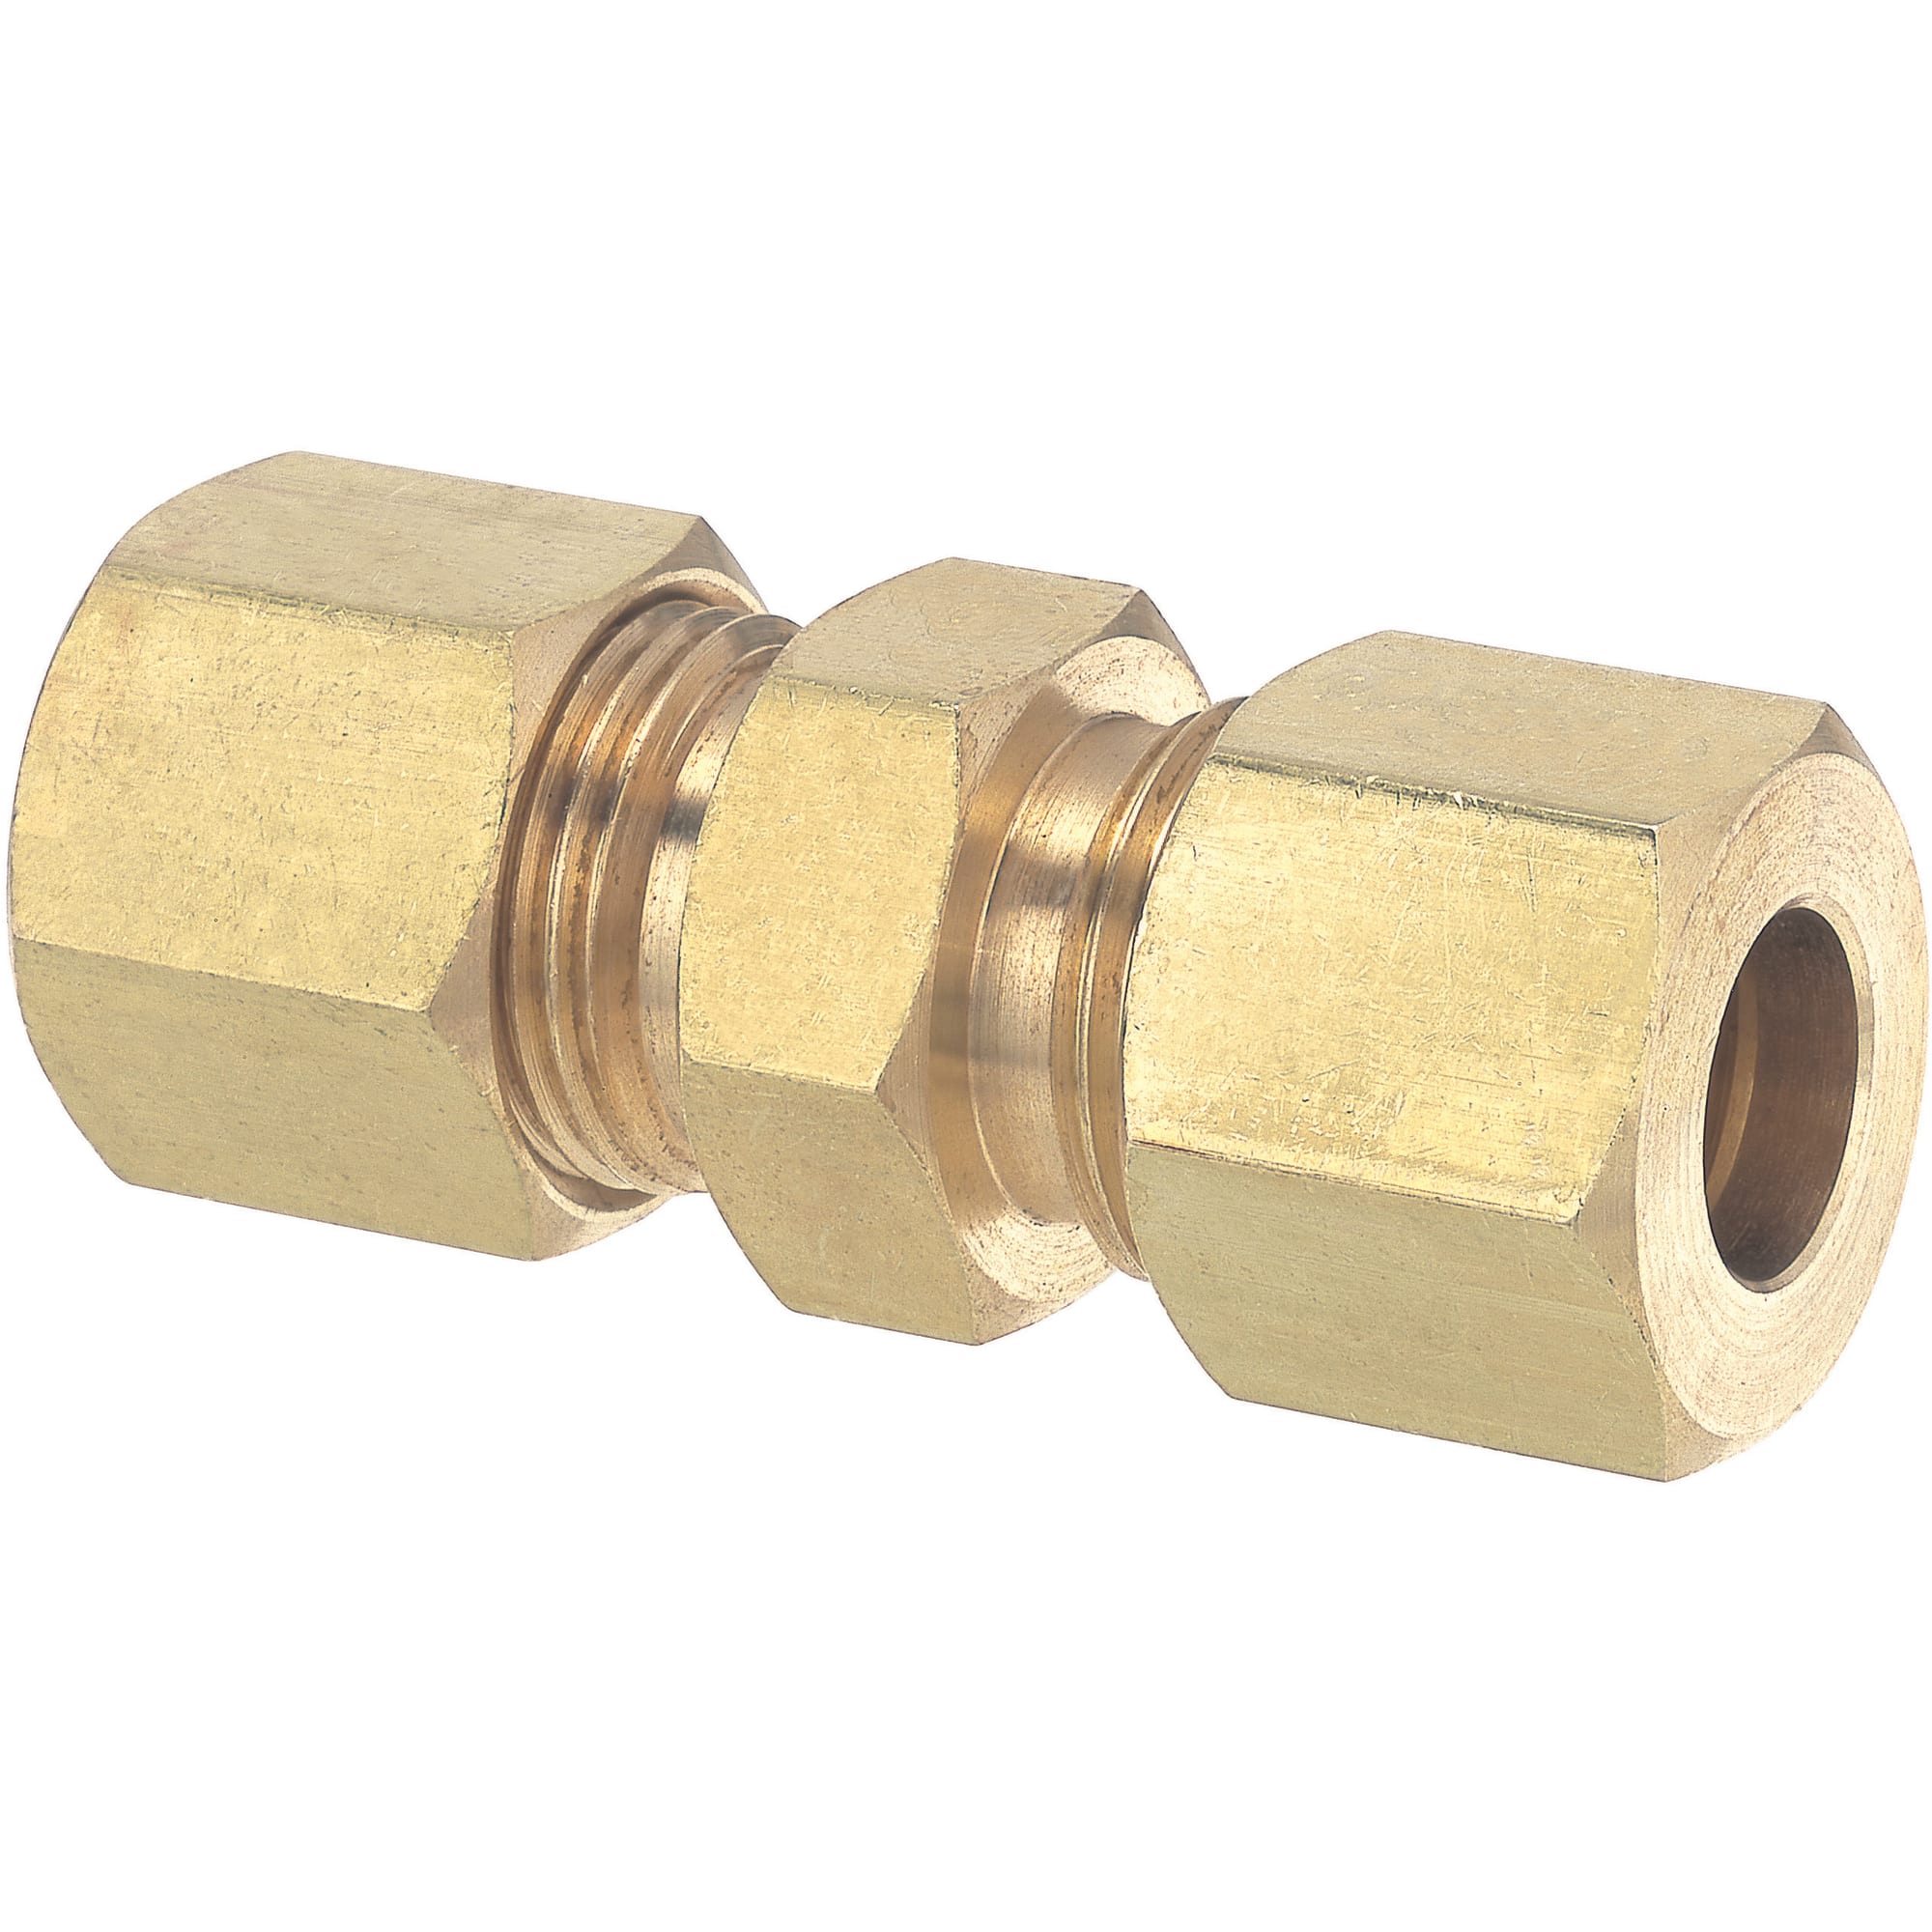 Copper Pipe Compression Fittings Supplier